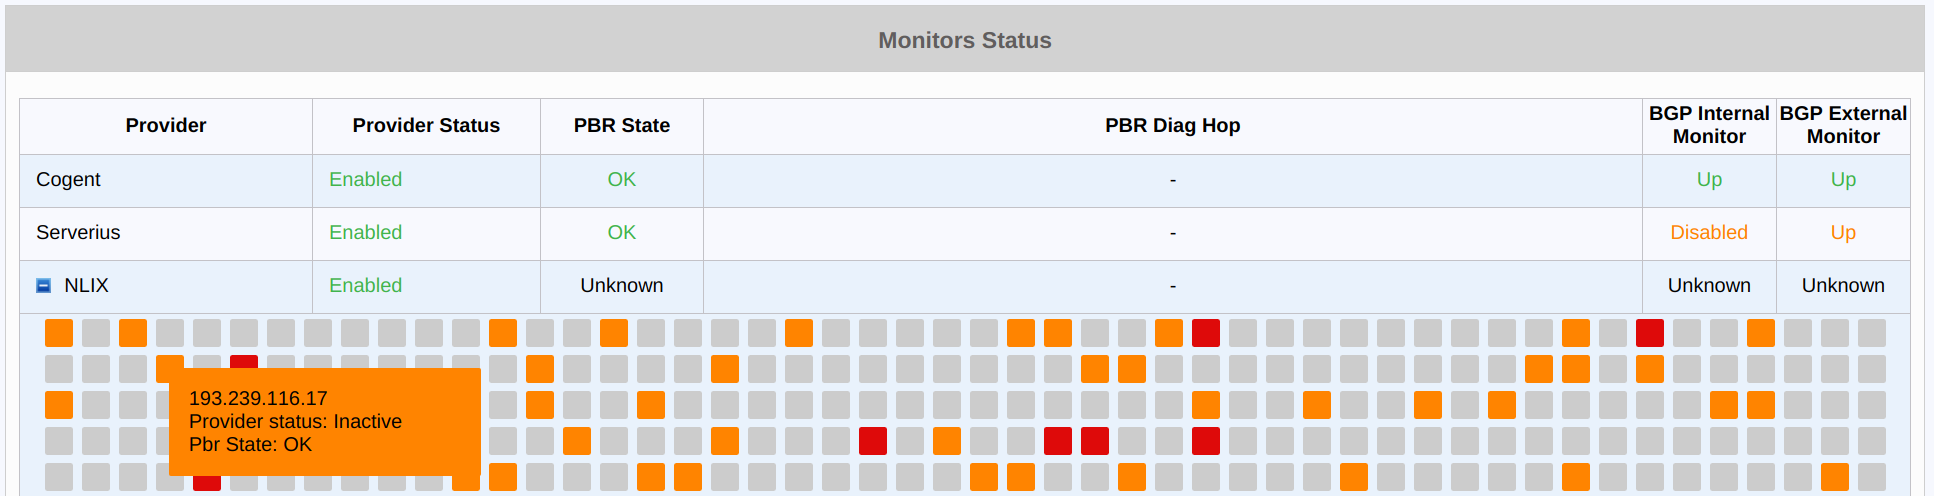 figure screenshots/report-monitors-status.png